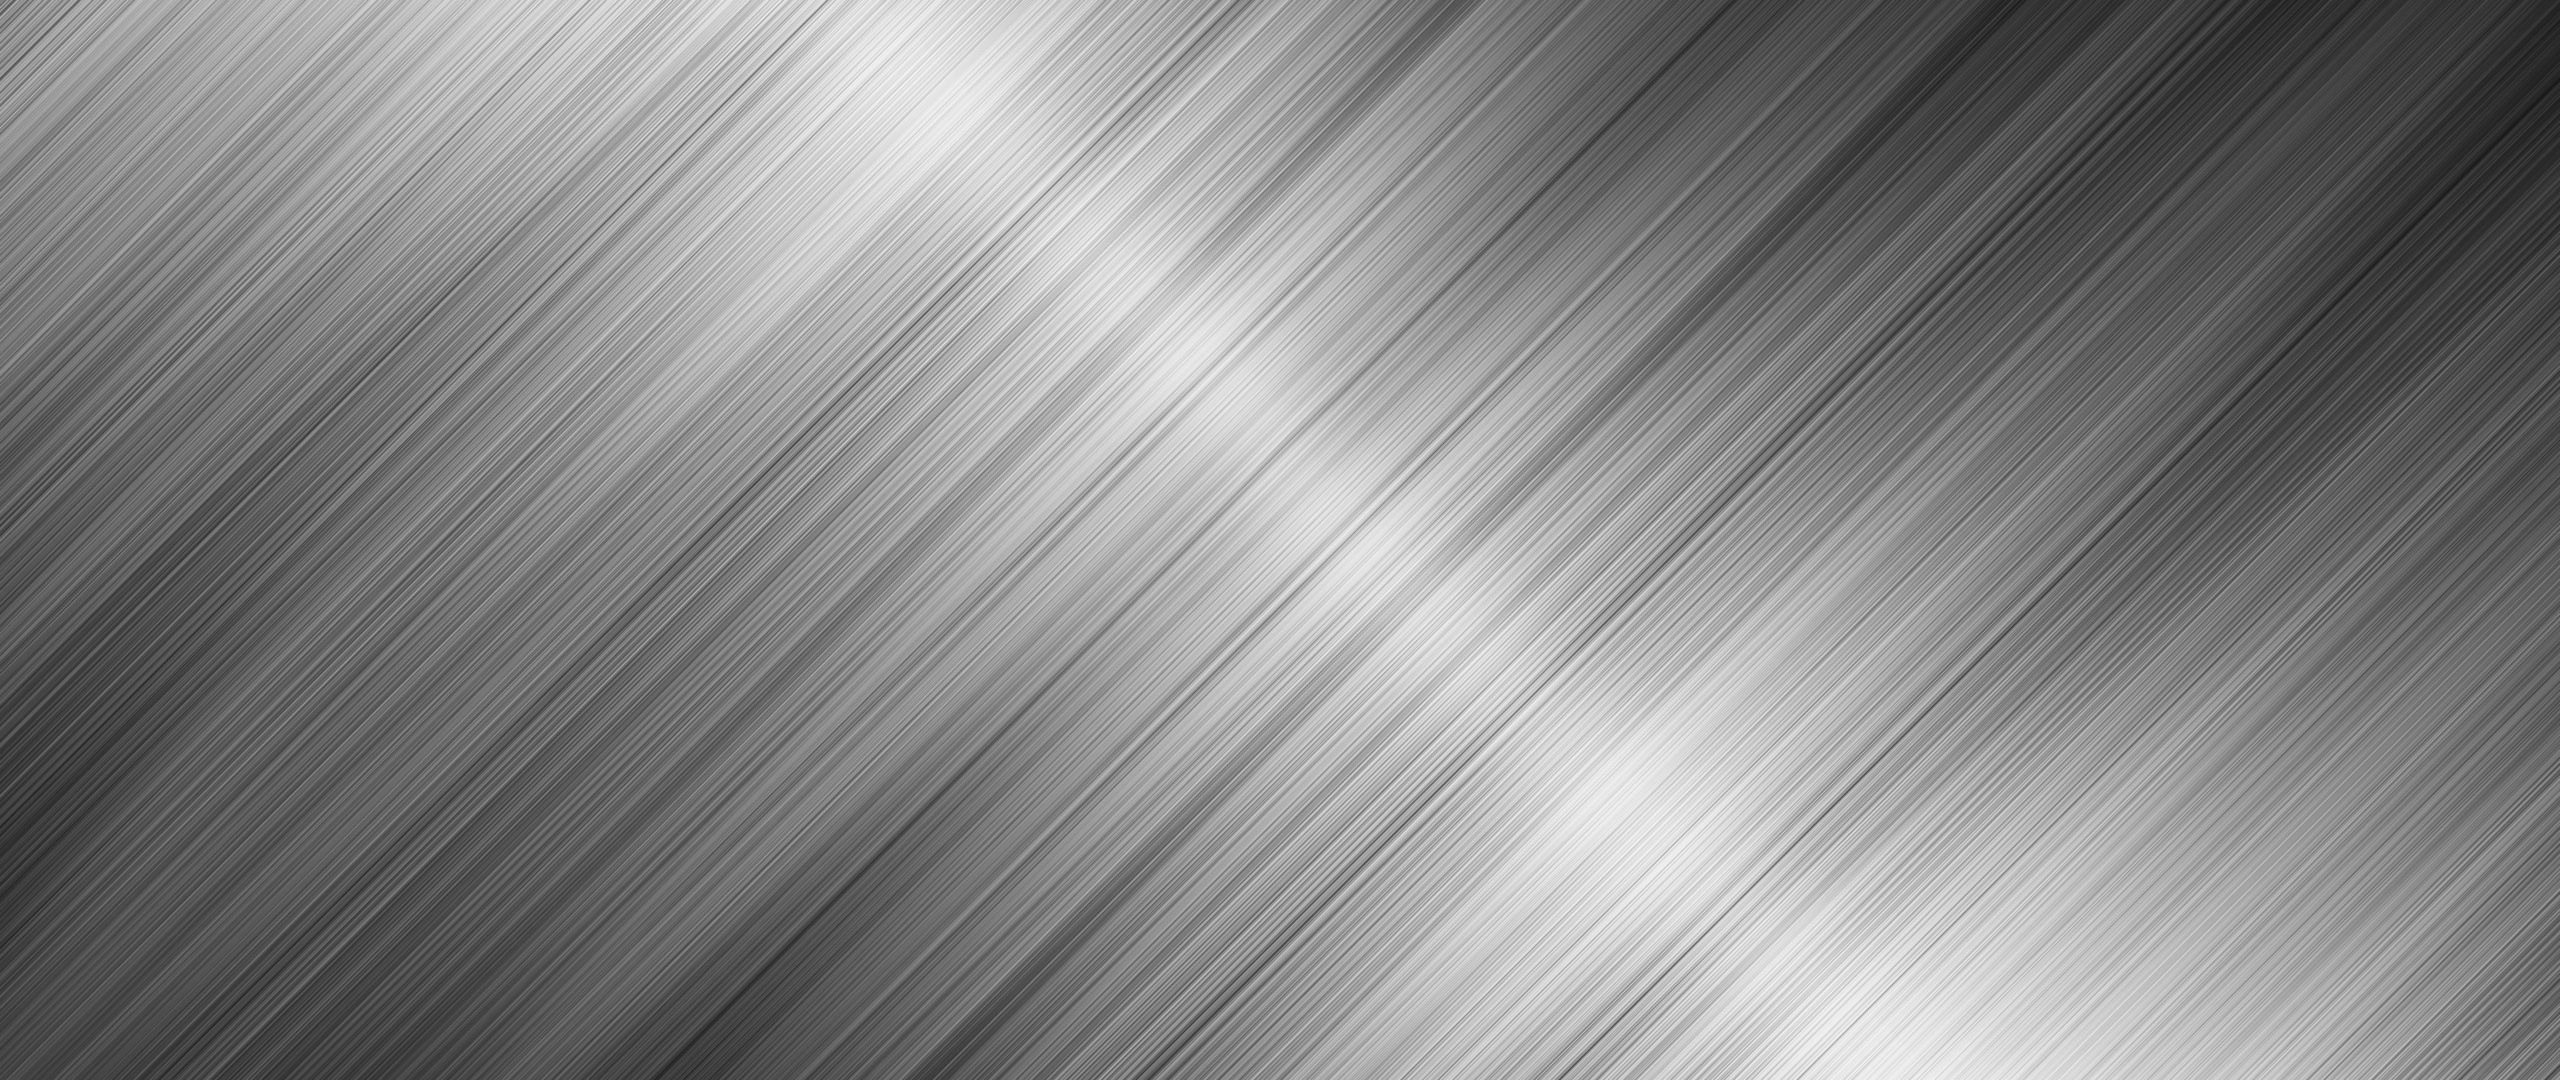 Wallpaper Metal Lines Stripes Light Shiny